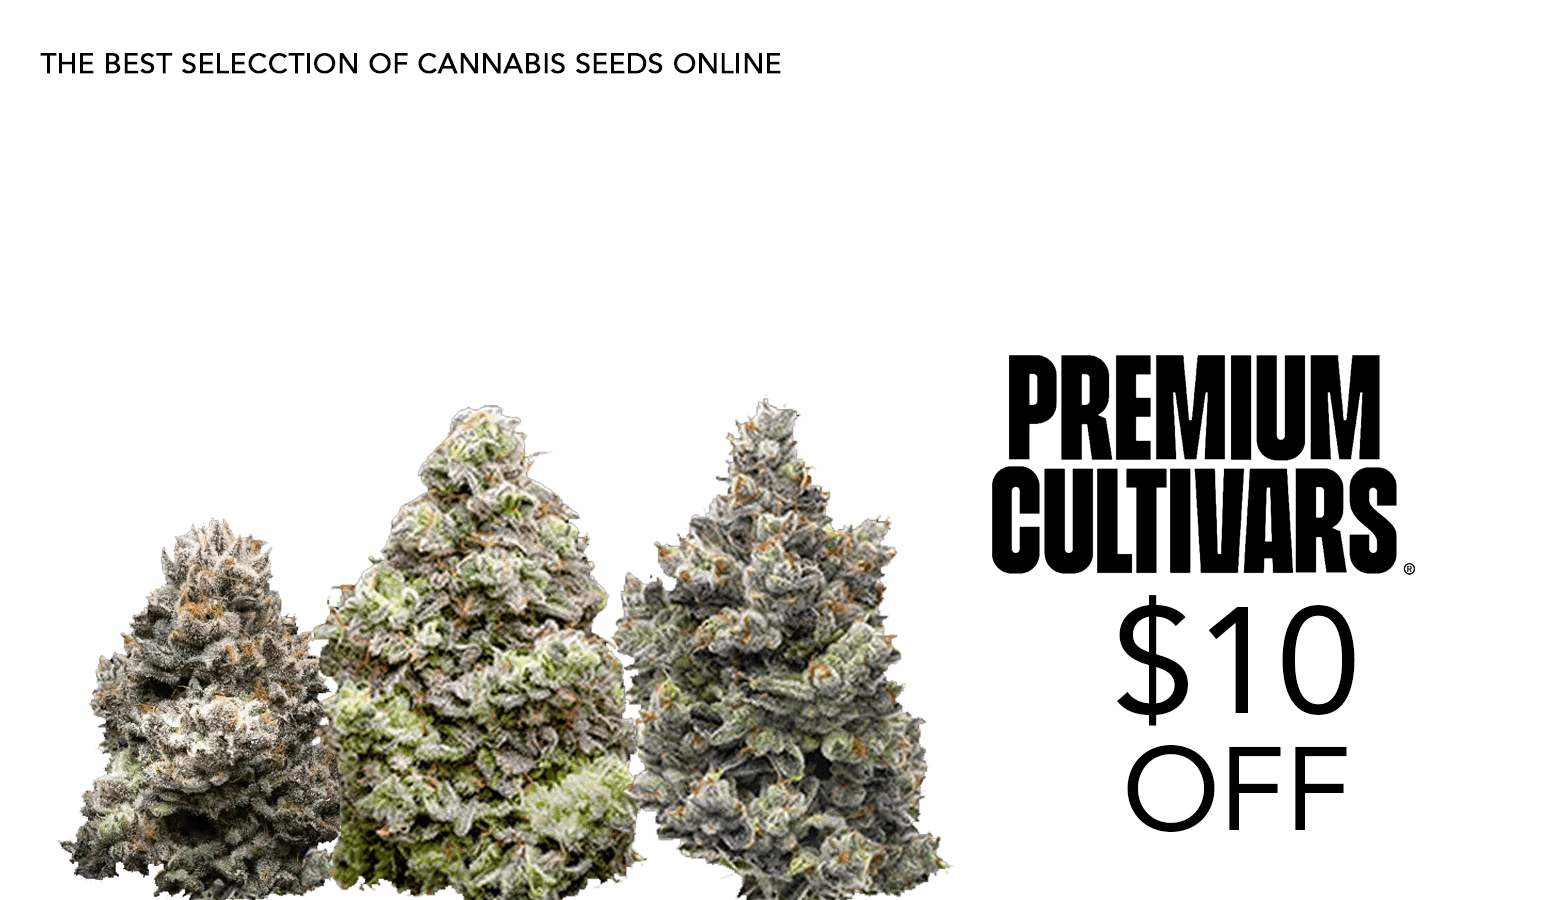 Premium Cultivars Coupon - $10 off - Save On Cannabis